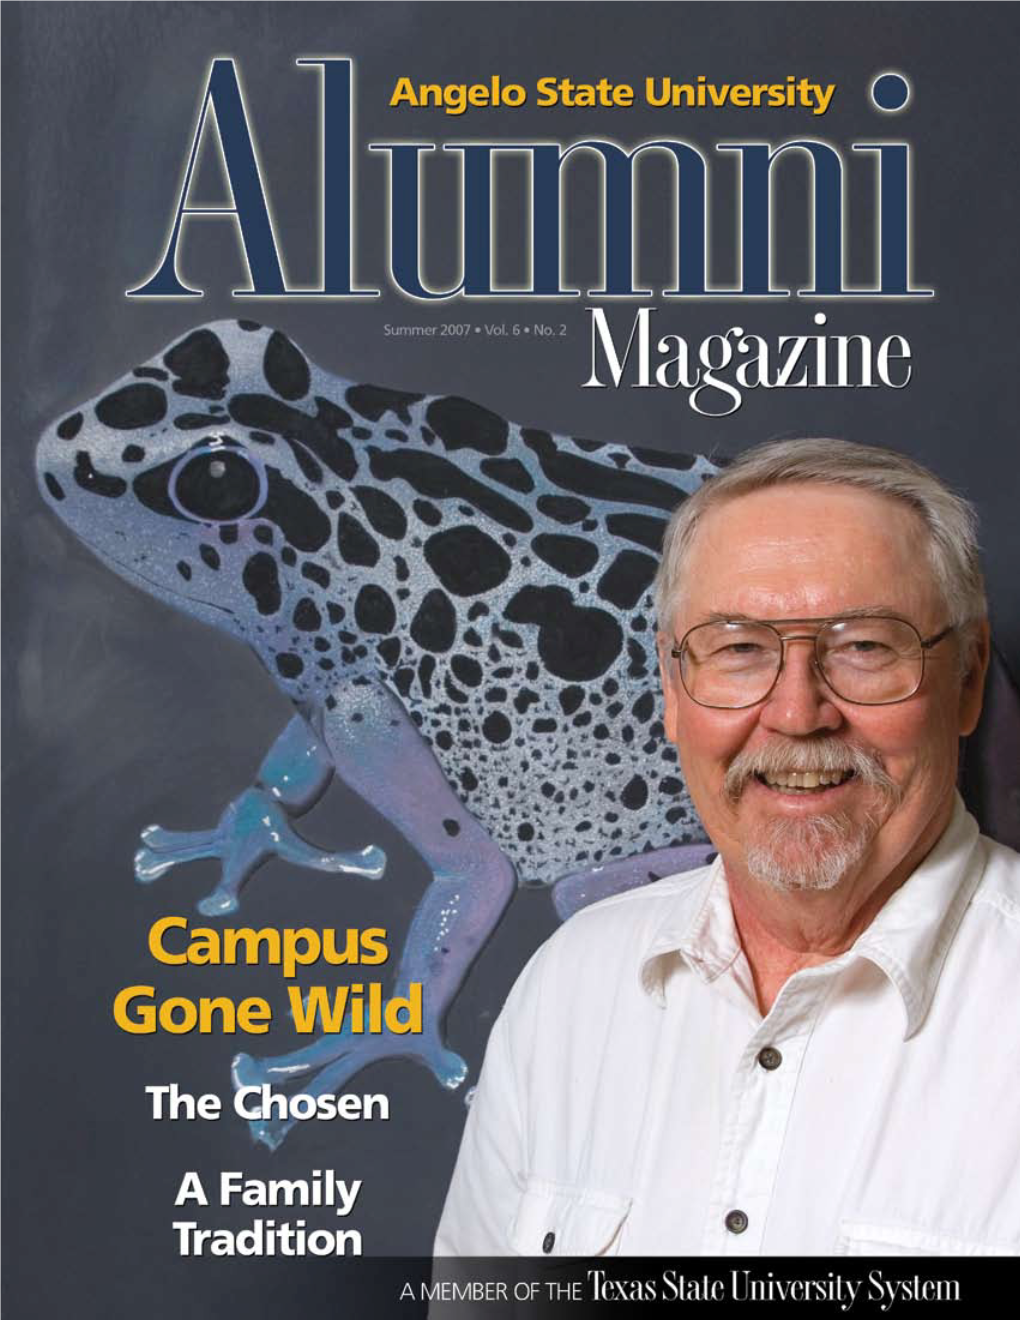 SUMMER 2007 Angelo State University Alumni Magazine Alumniangelo State University Magazine Contents Summer 2007 Vol